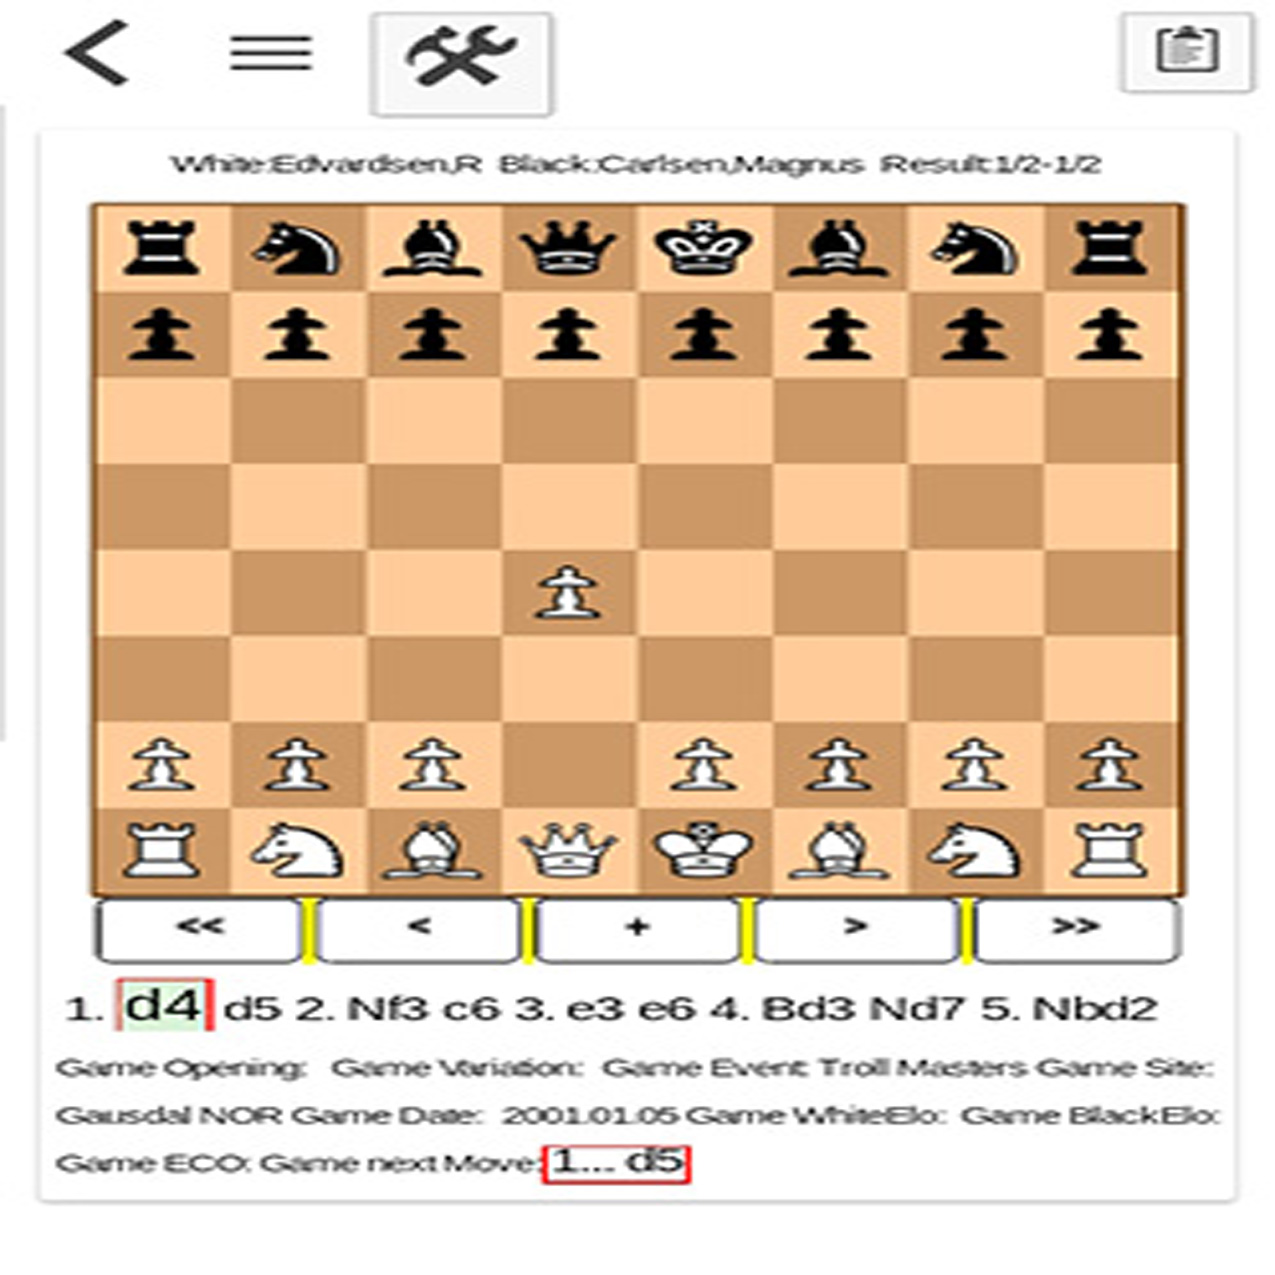 Best Chess Game App